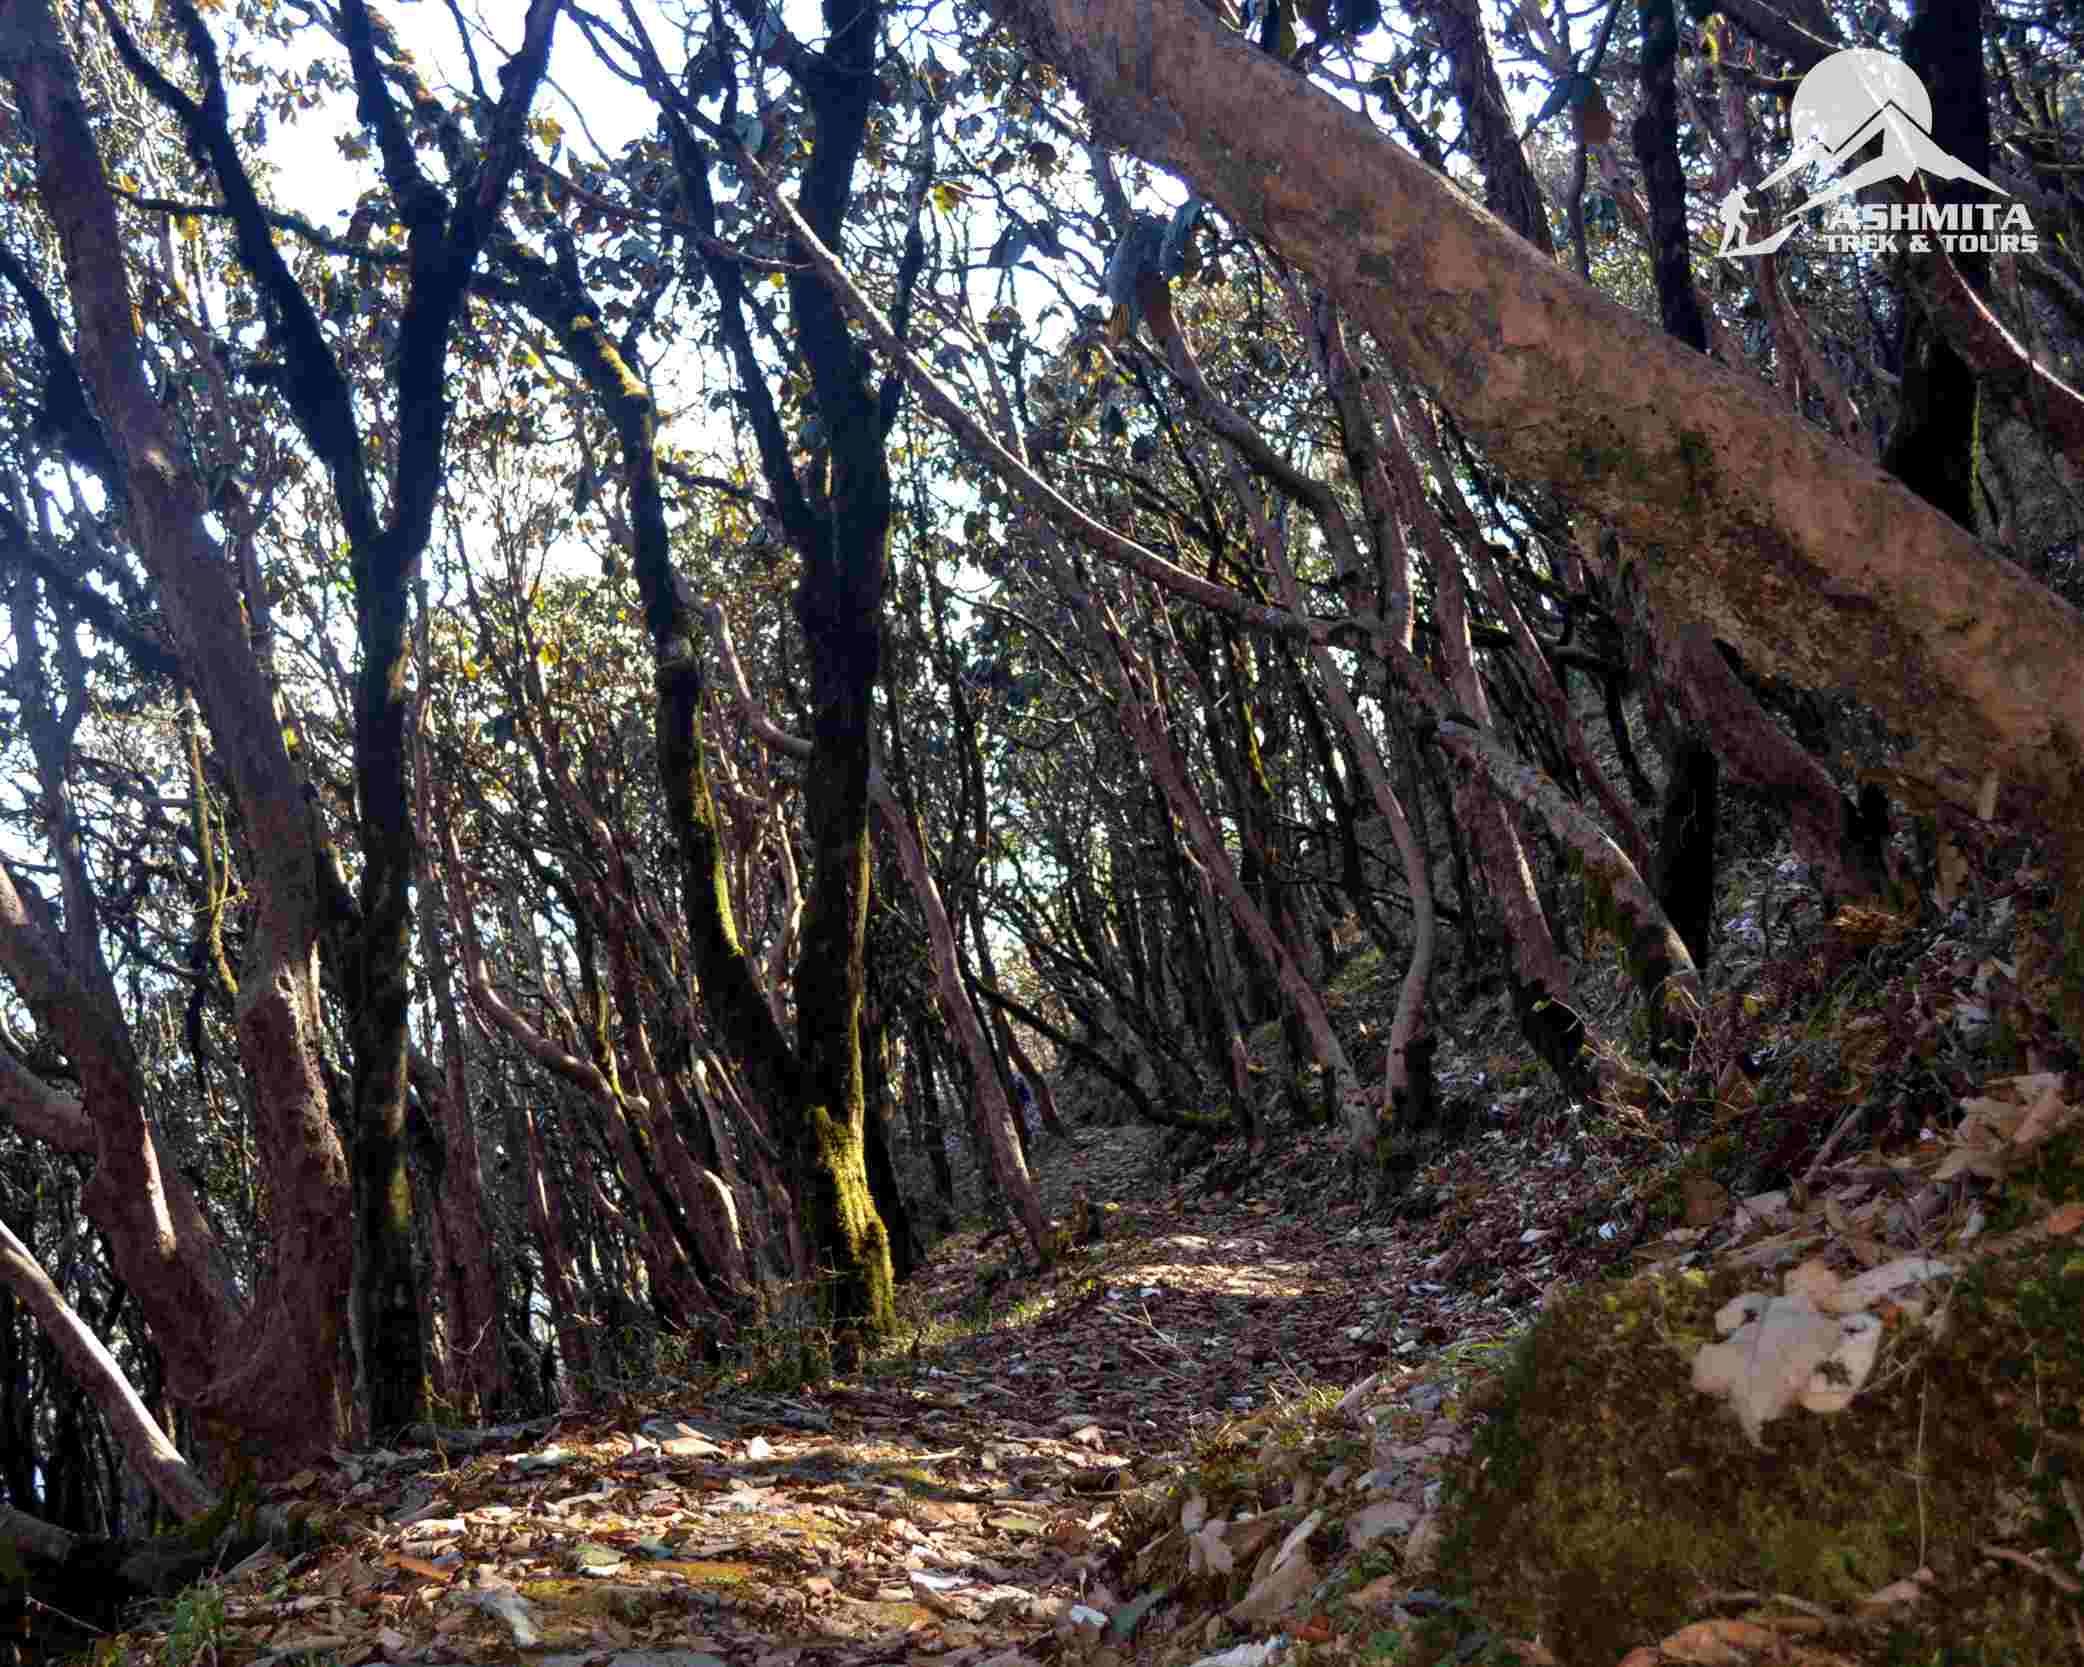 You will trek through the Densest Pine forest